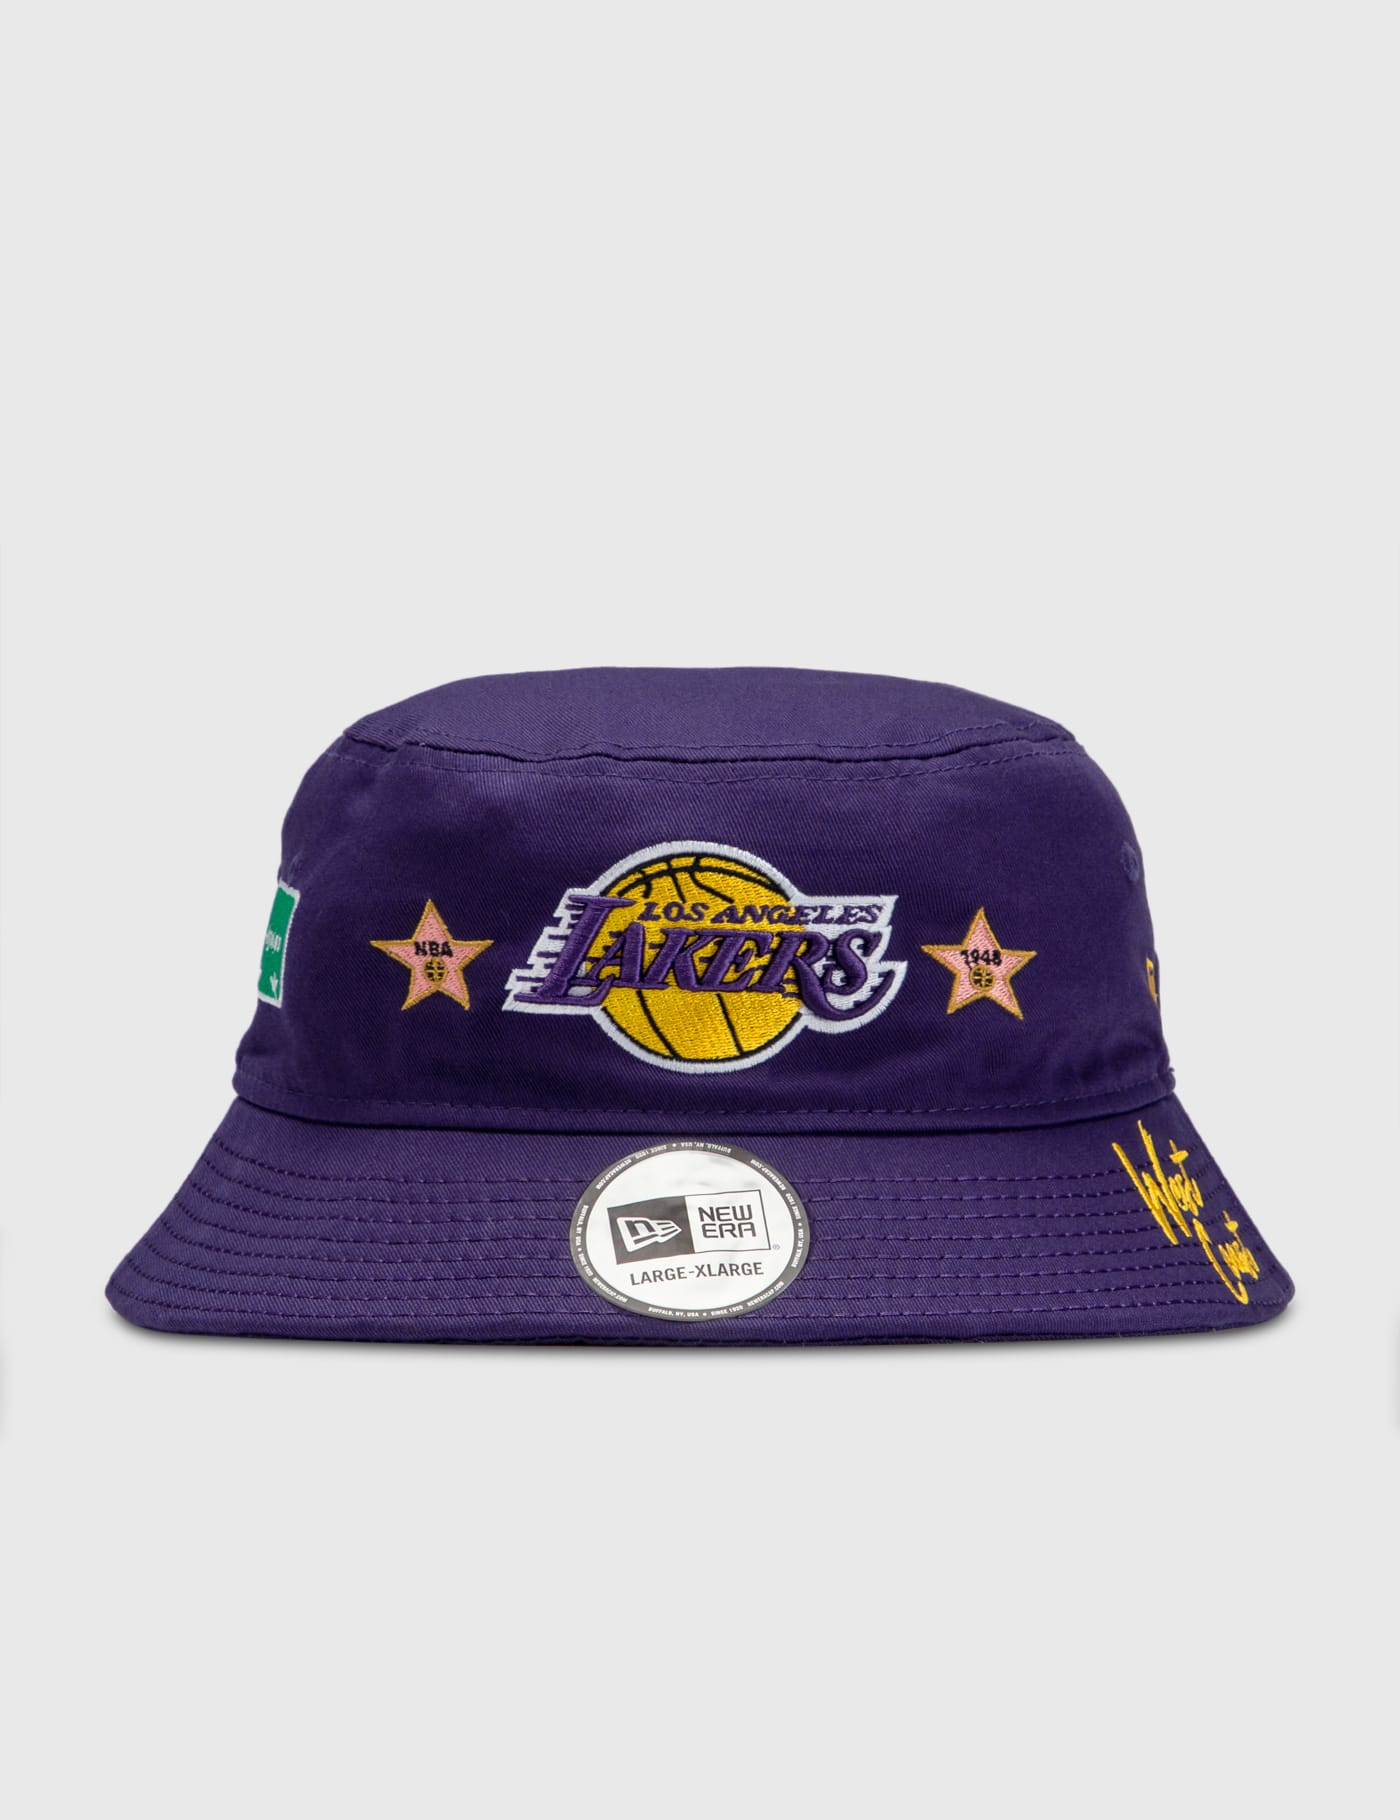 discount 70% Trangoworld hat and cap Purple Single WOMEN FASHION Accessories Hat and cap Purple 